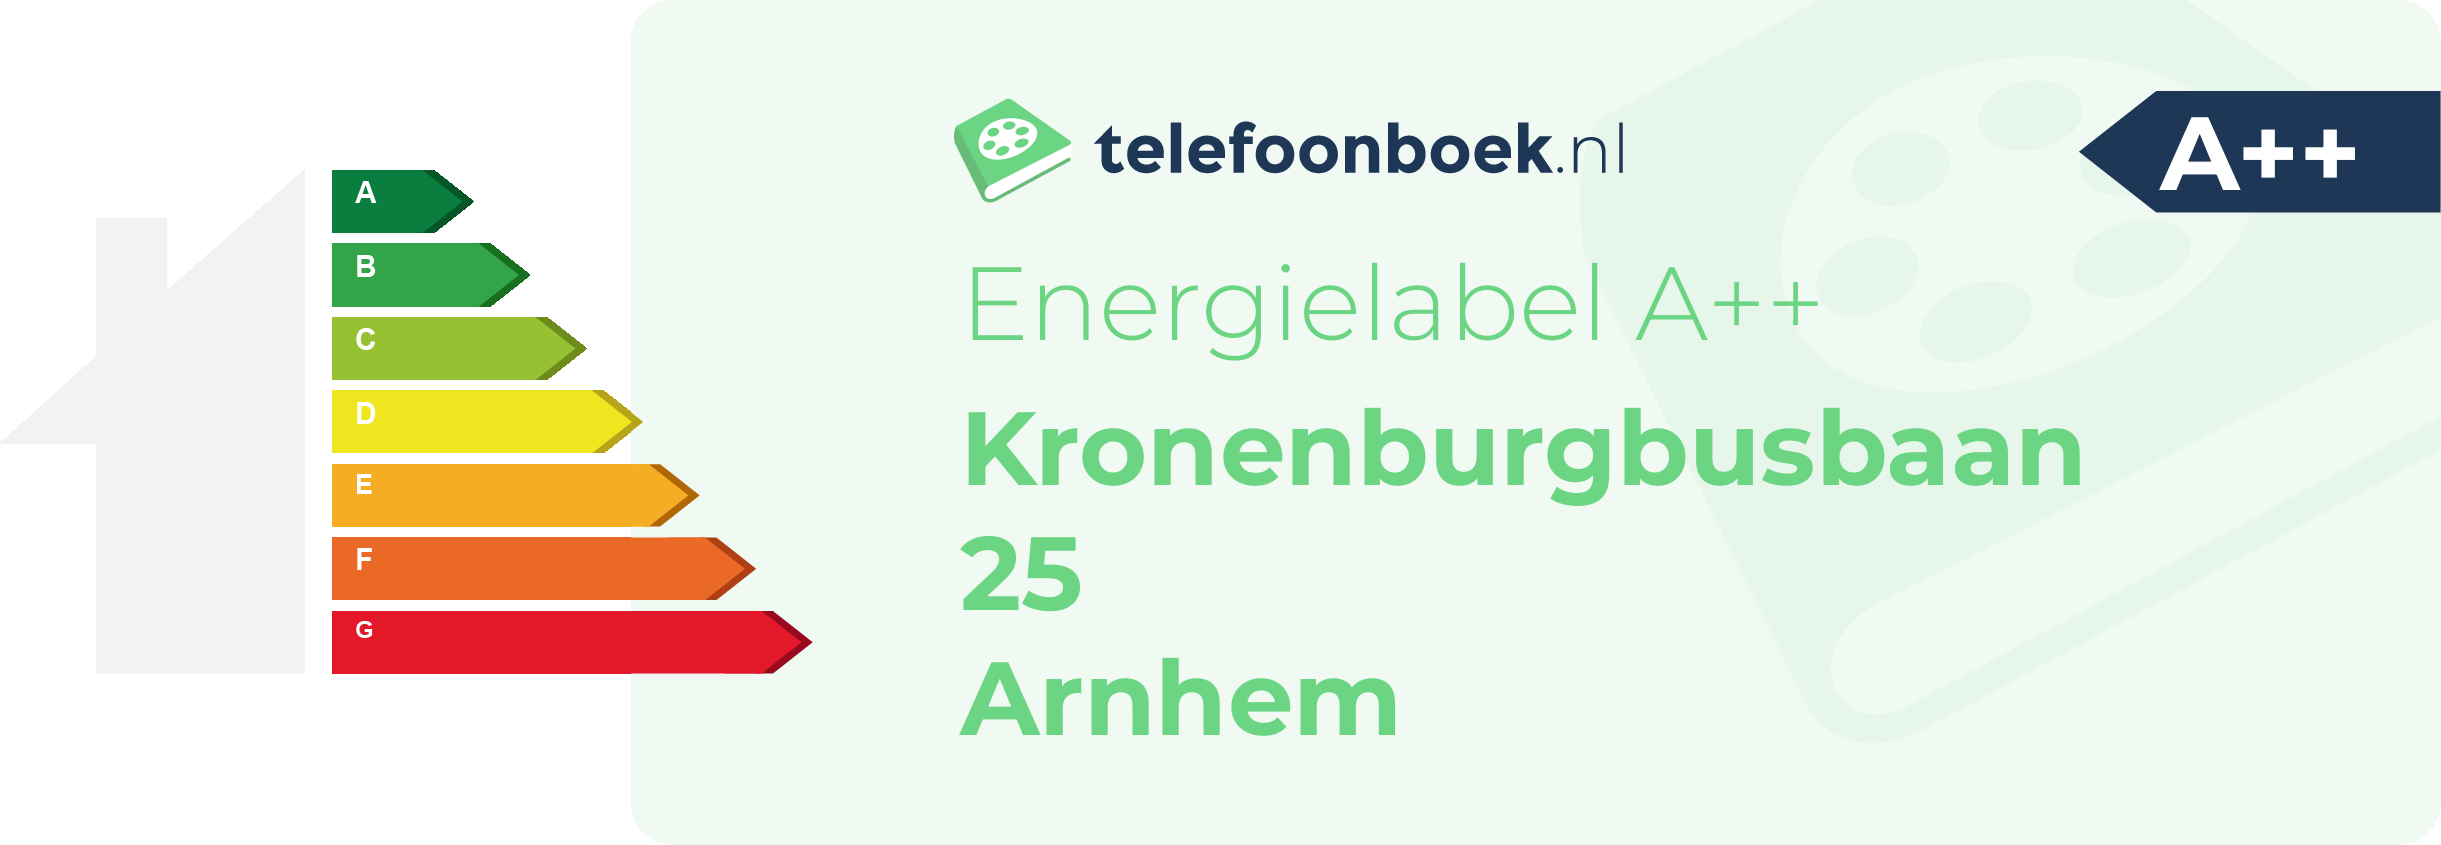 Energielabel Kronenburgbusbaan 25 Arnhem